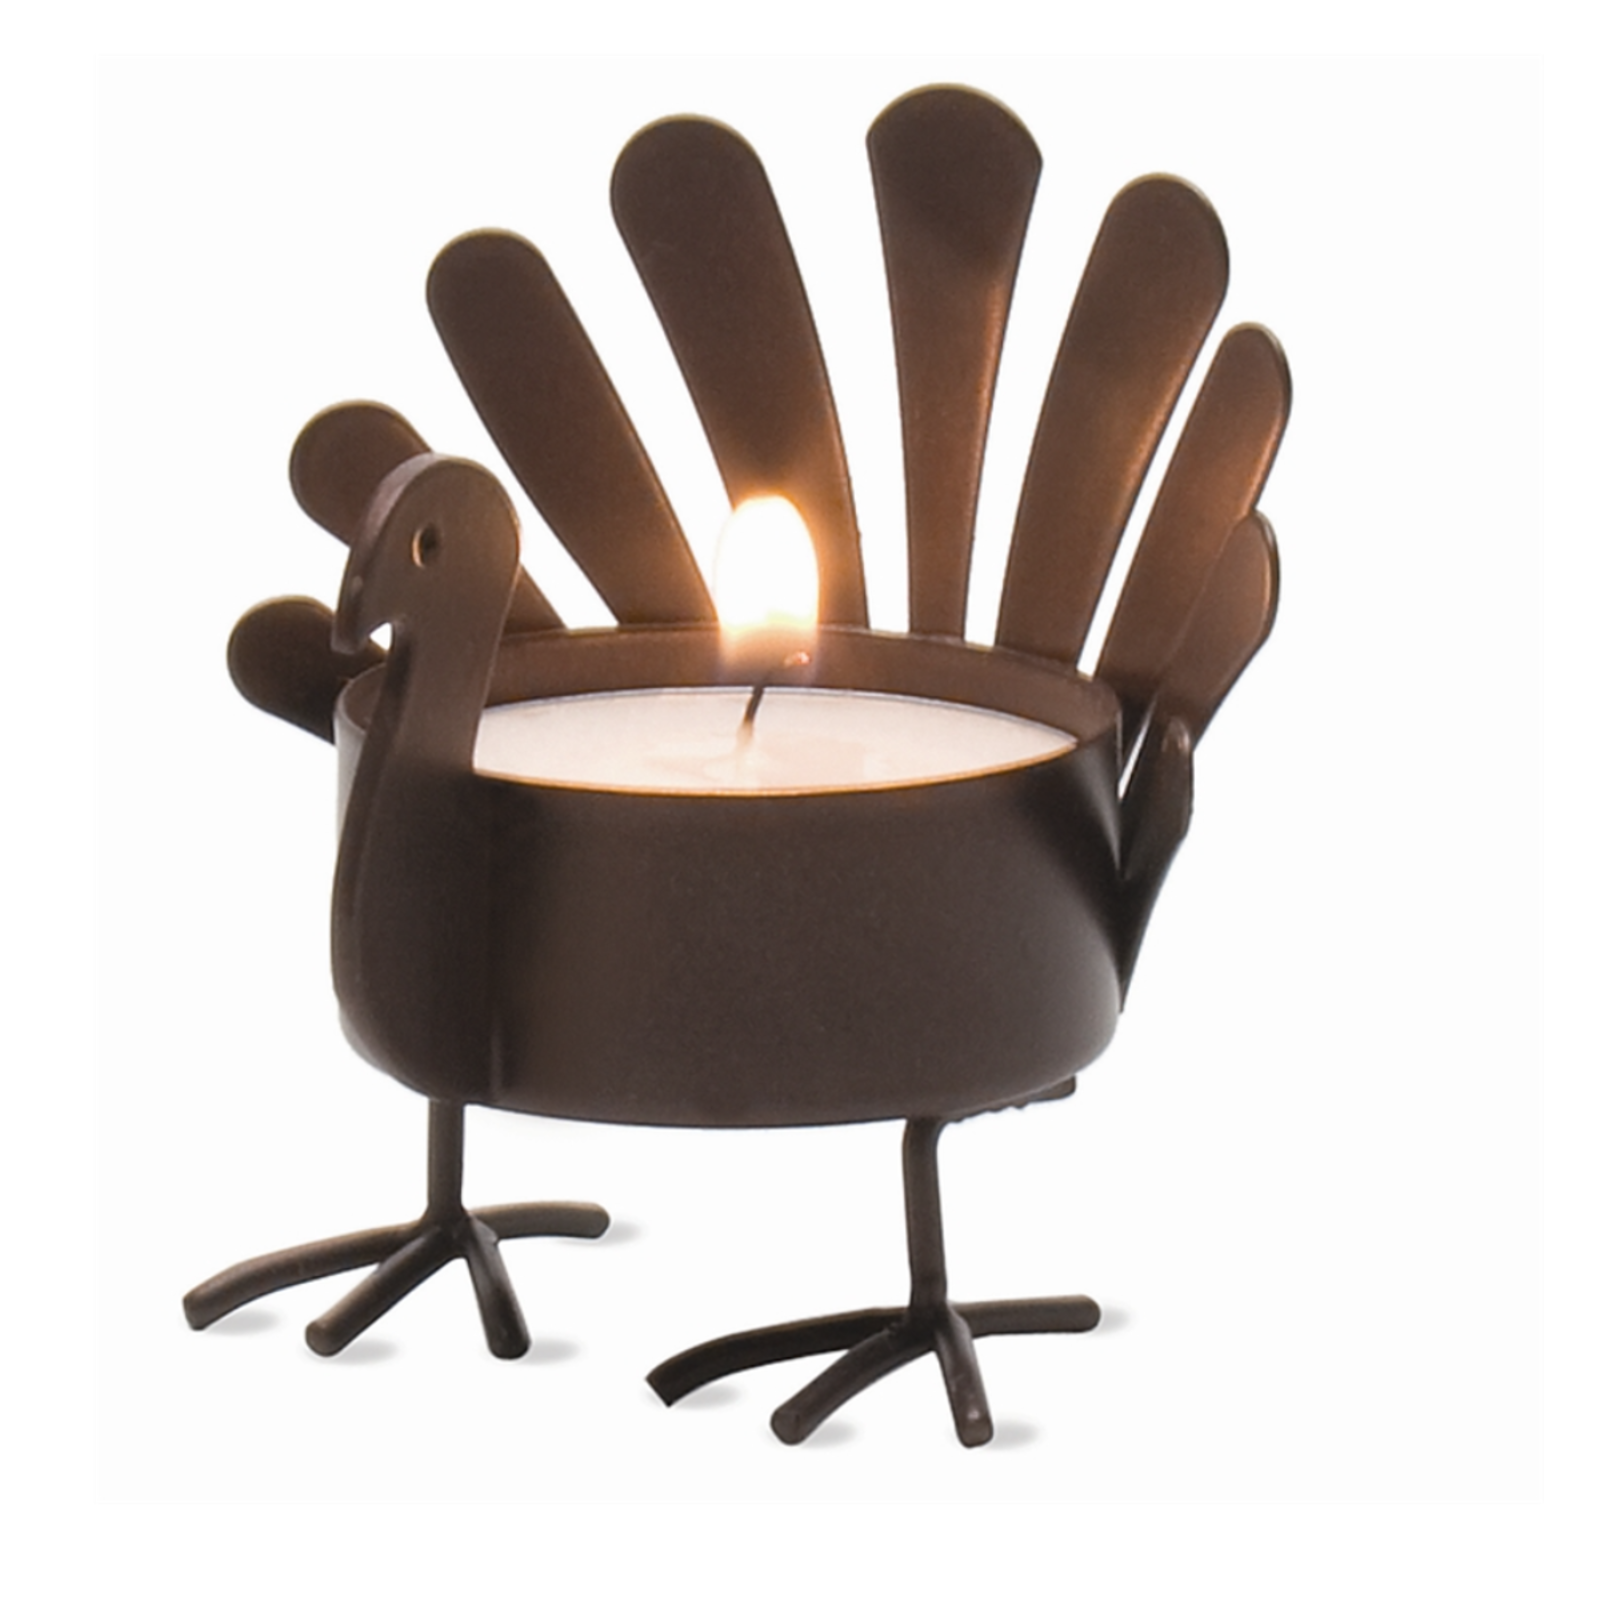 Tag Standing Turkey Tealight Holder loading=